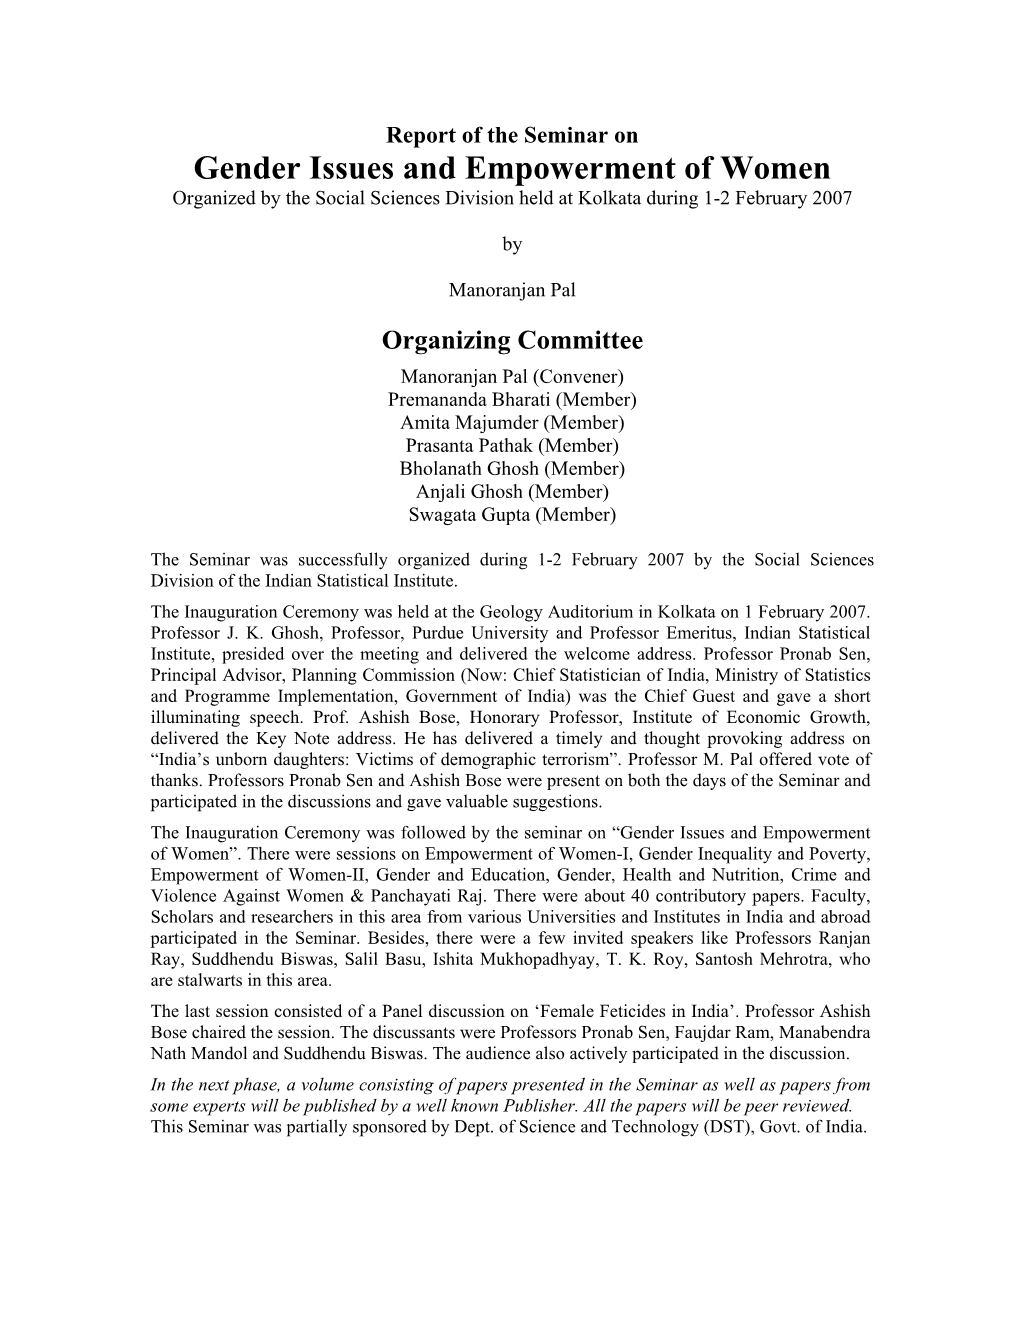 Gender Issues and Empowerment of Women”, Kolkata